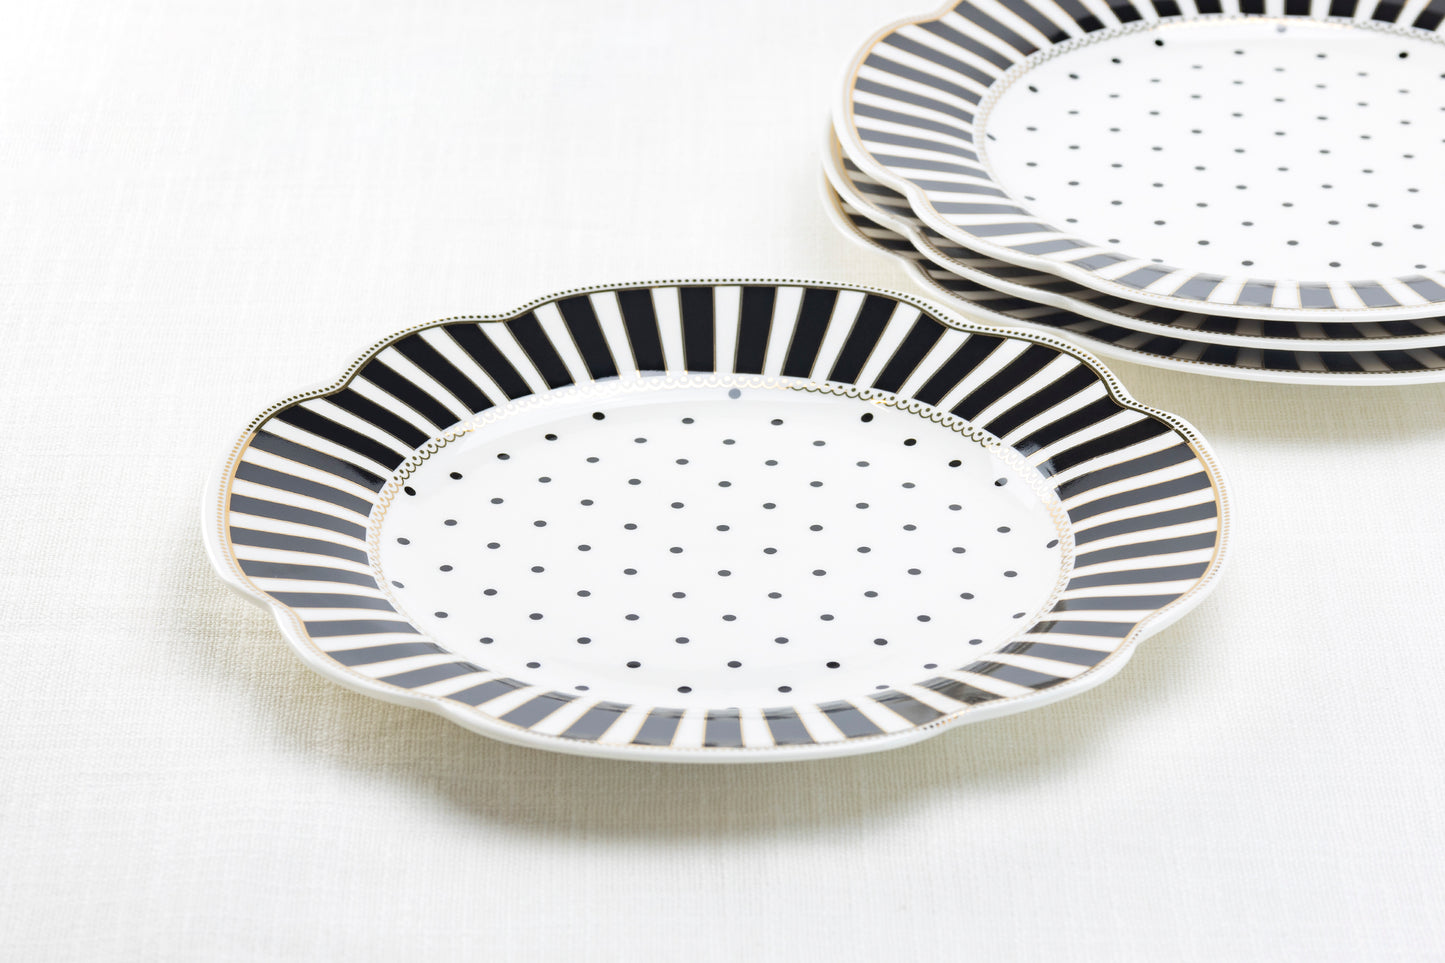 Black Josephine Stripes and Dots Fine Porcelain Dessert / Dinner Plate